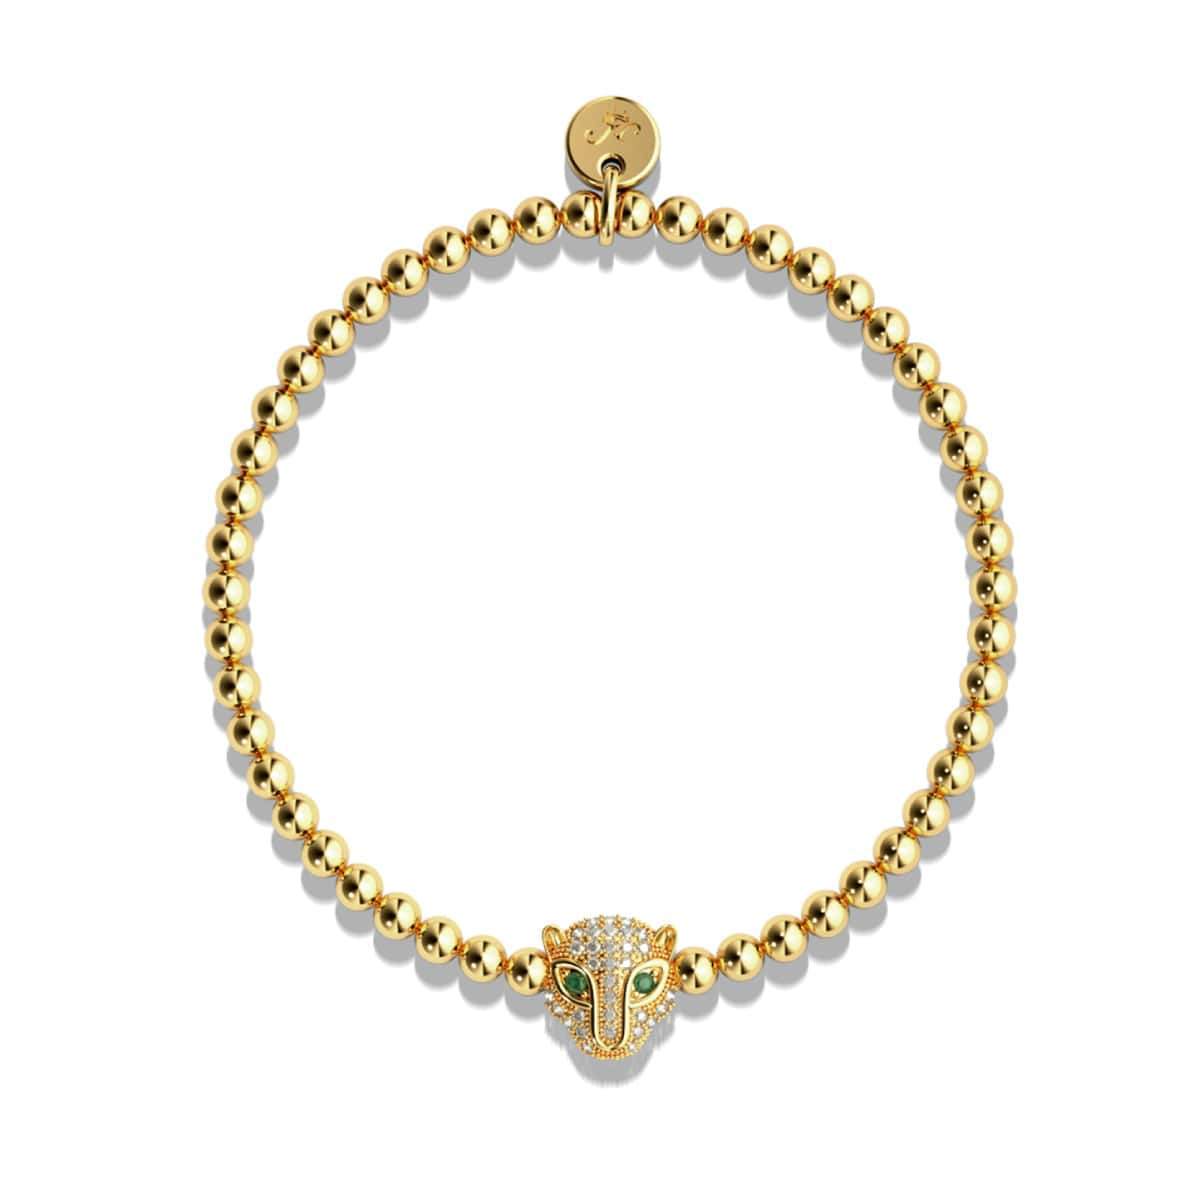 Buy quality 916 Gold Jaguar Handmade Bracelet in Ahmedabad